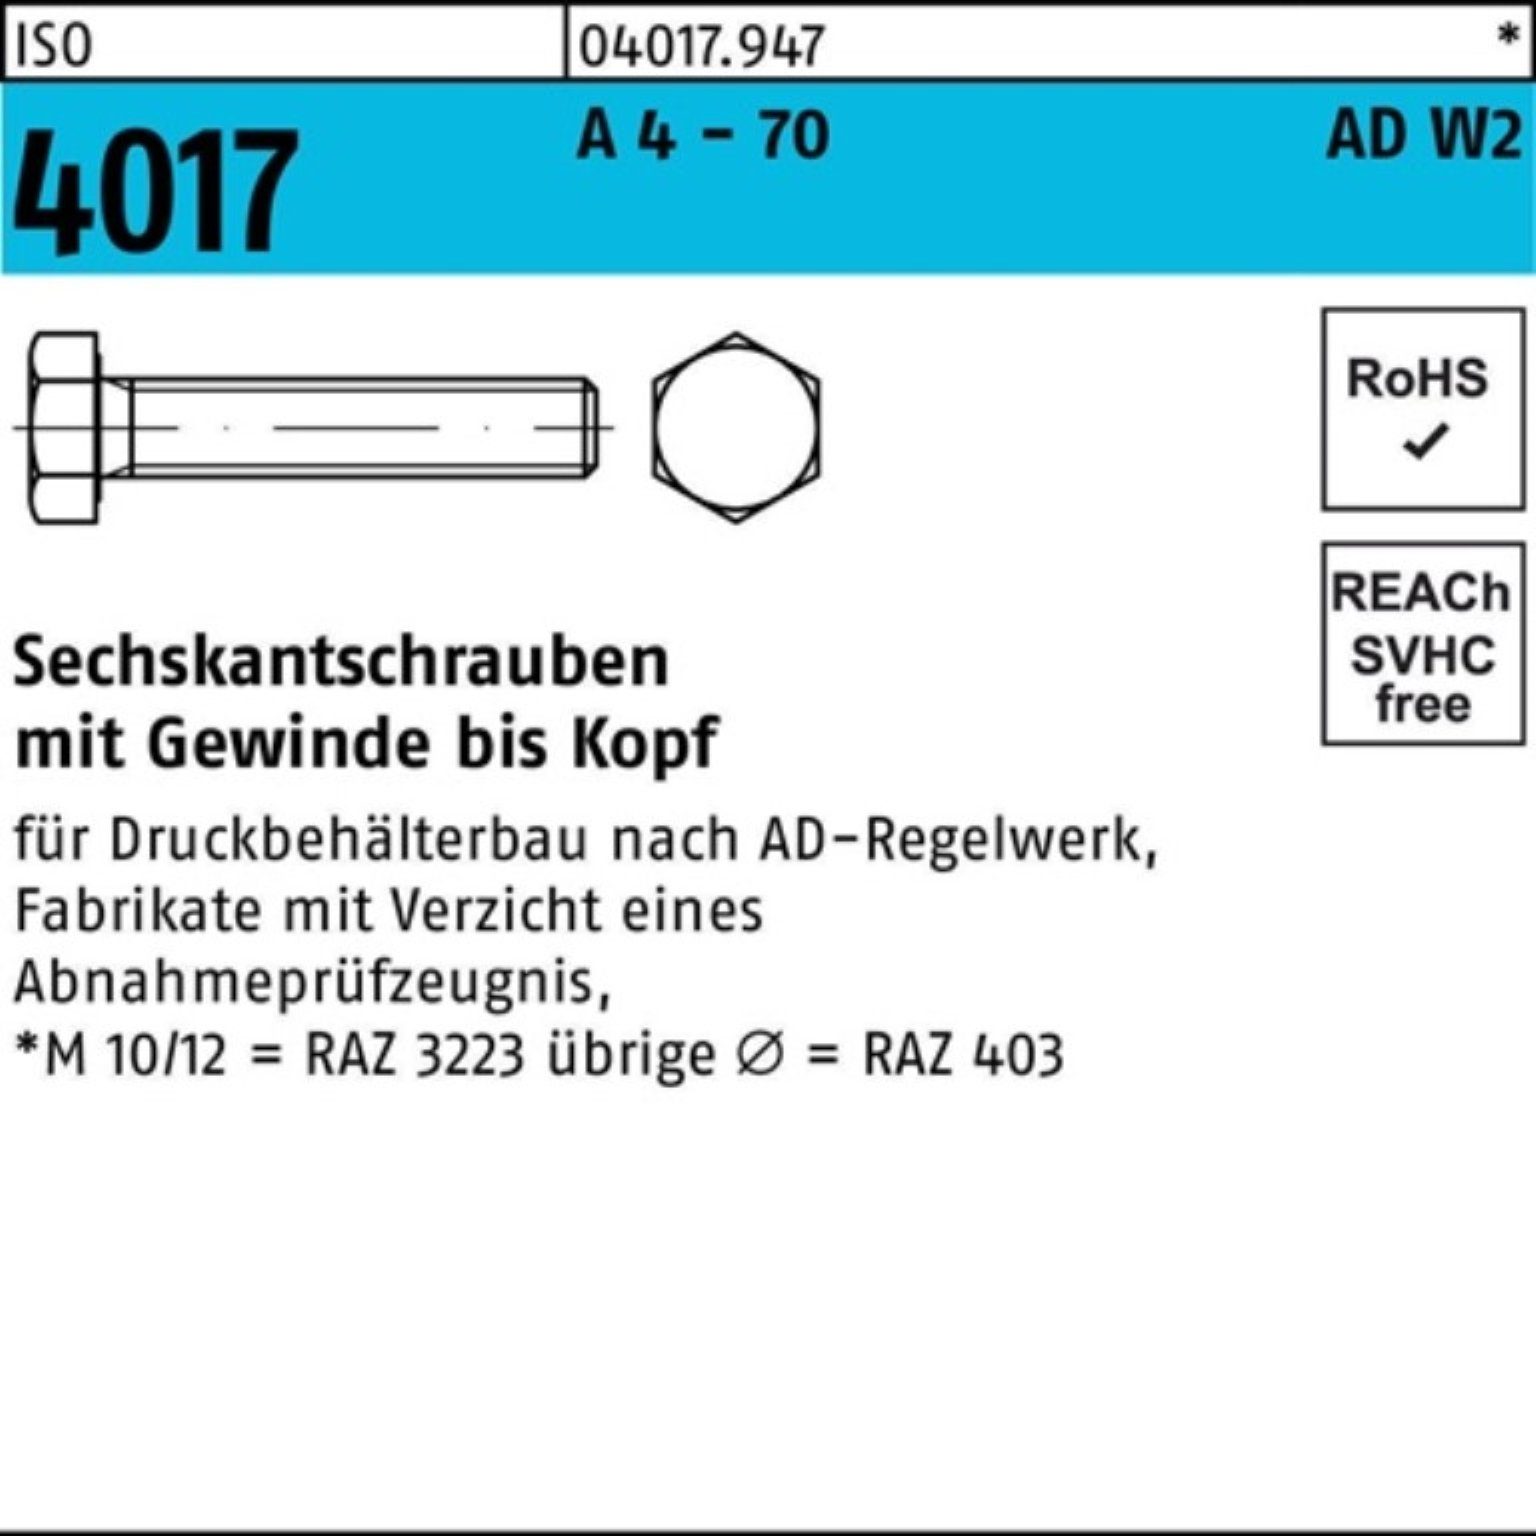 Bufab Sechskantschraube 100er Pack Sechskantschraube ISO 4017 VG M24x 130 A 4 - 70 AD-W2 1 St